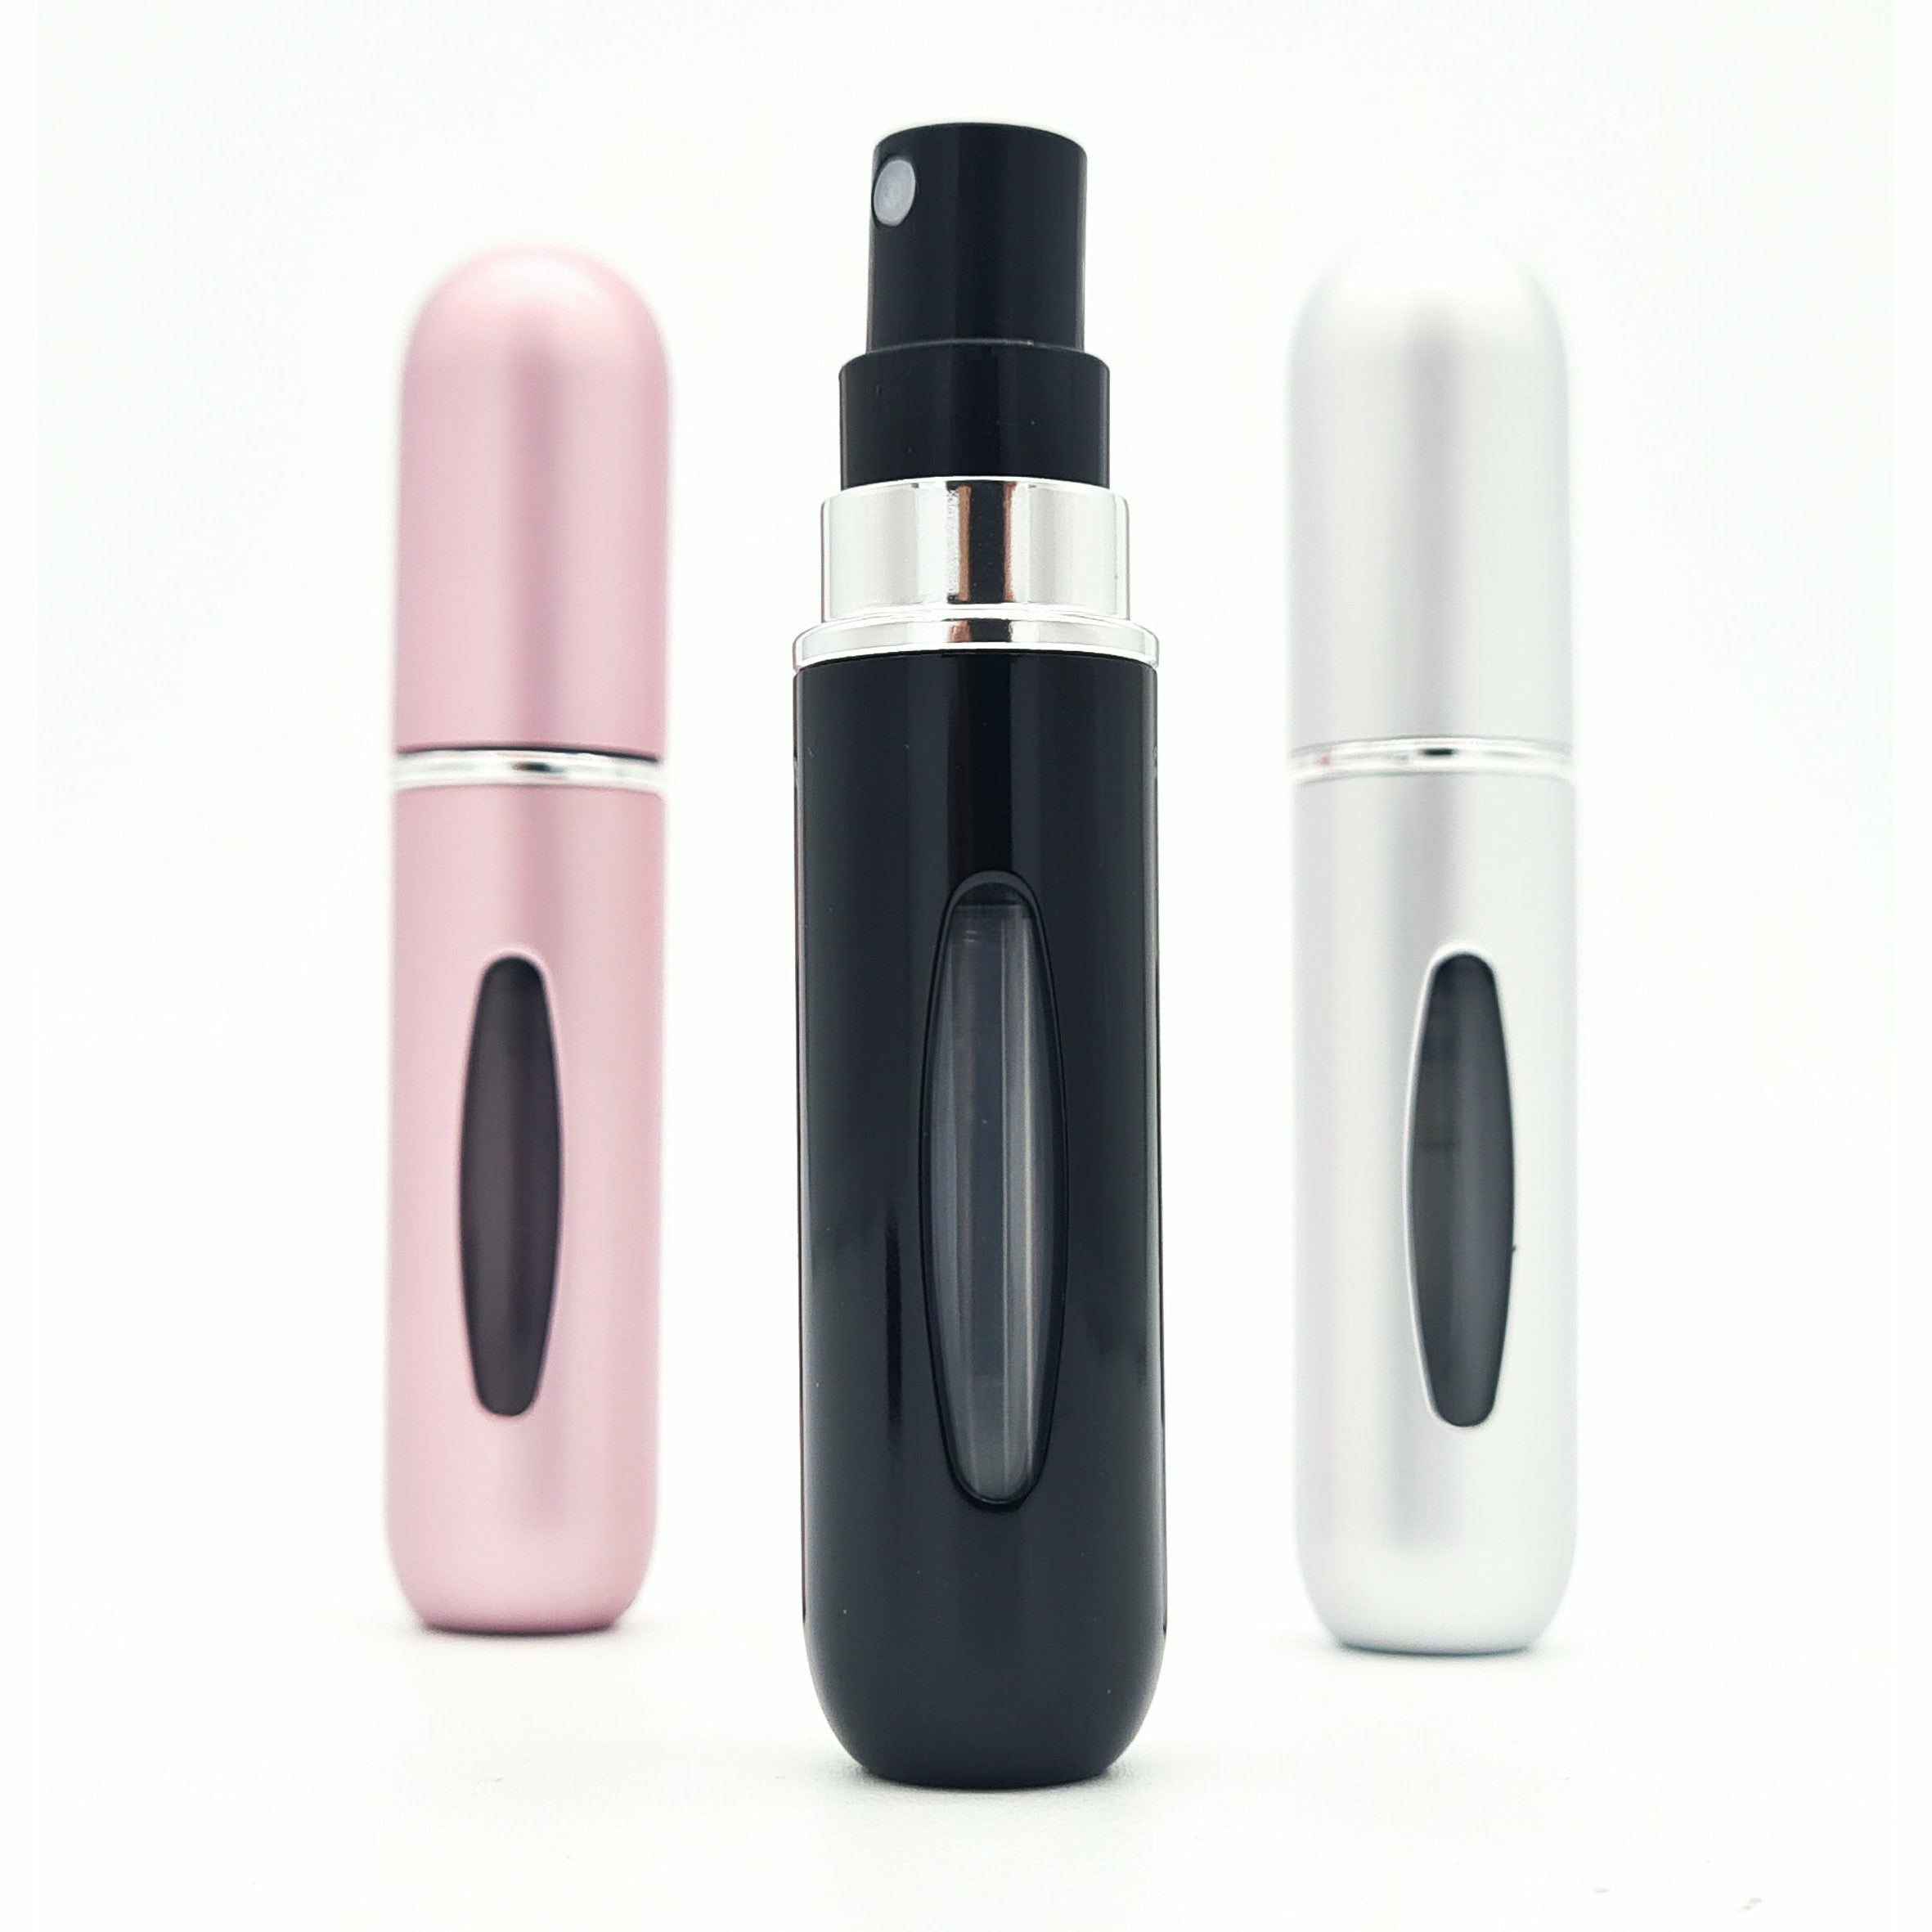 Portable Mini Refillable Perfume Bottle 3 Pack - Yellowtree